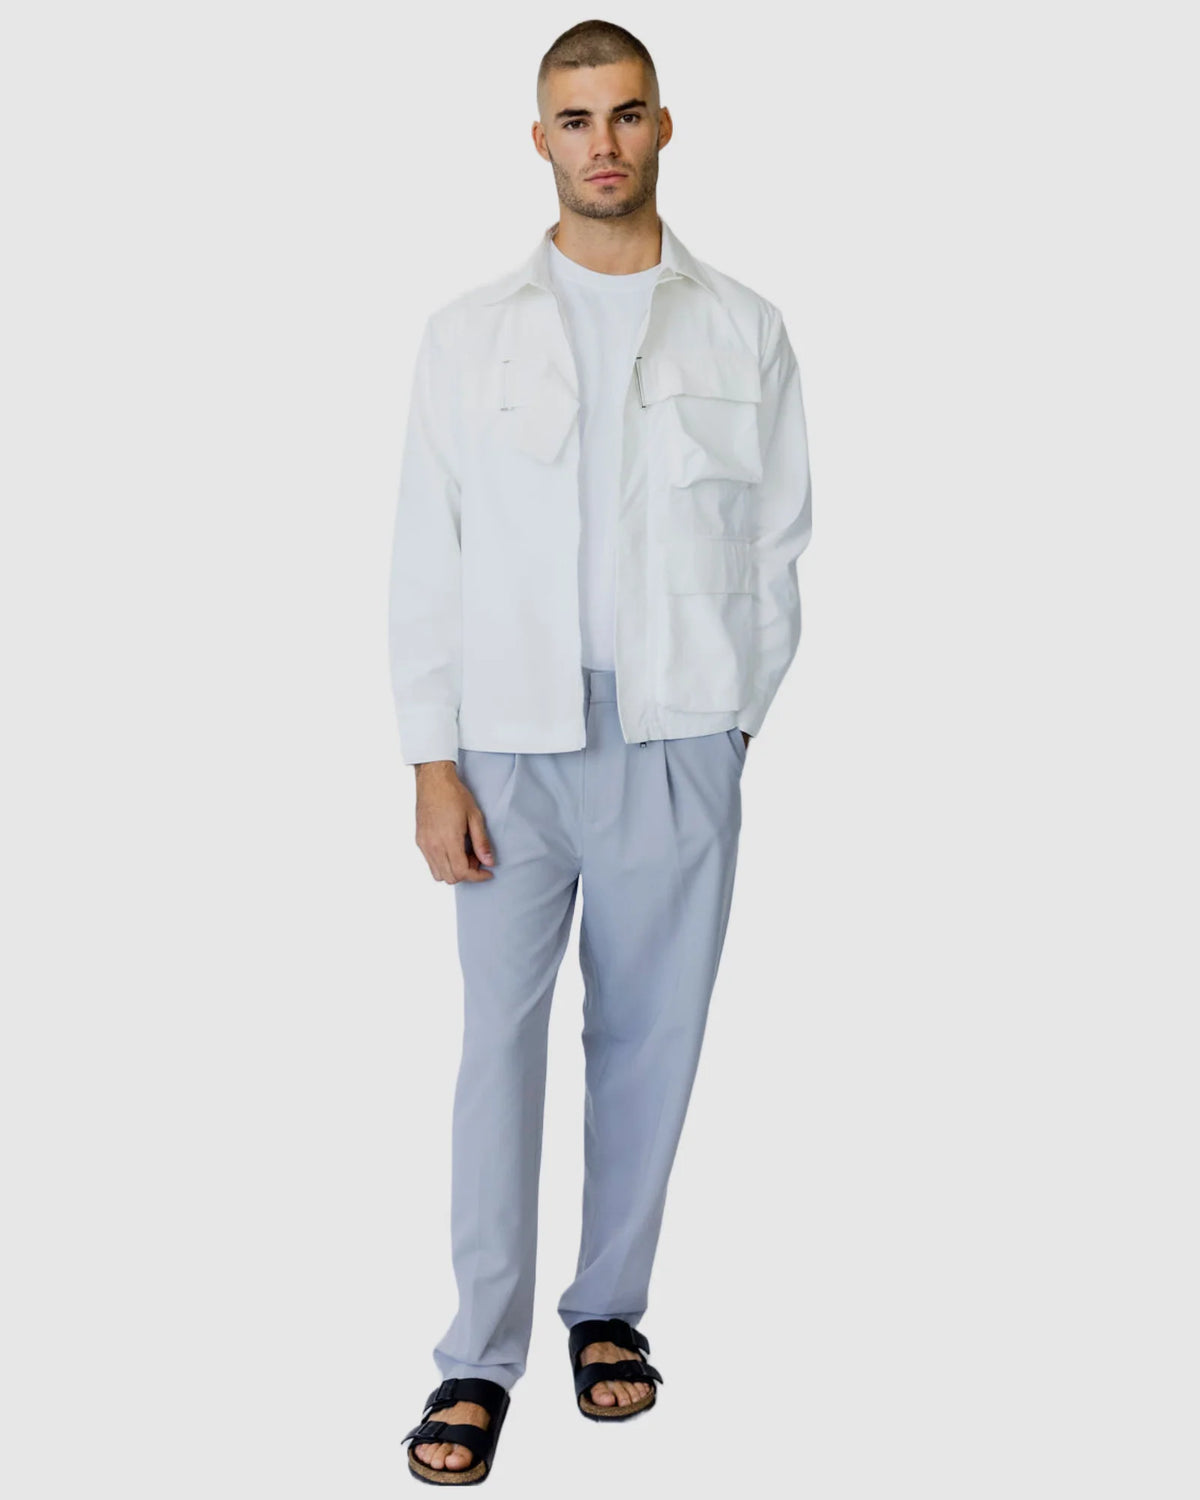 Justin Cassin Kurtis Dual Pocket Jacket in White Color 2